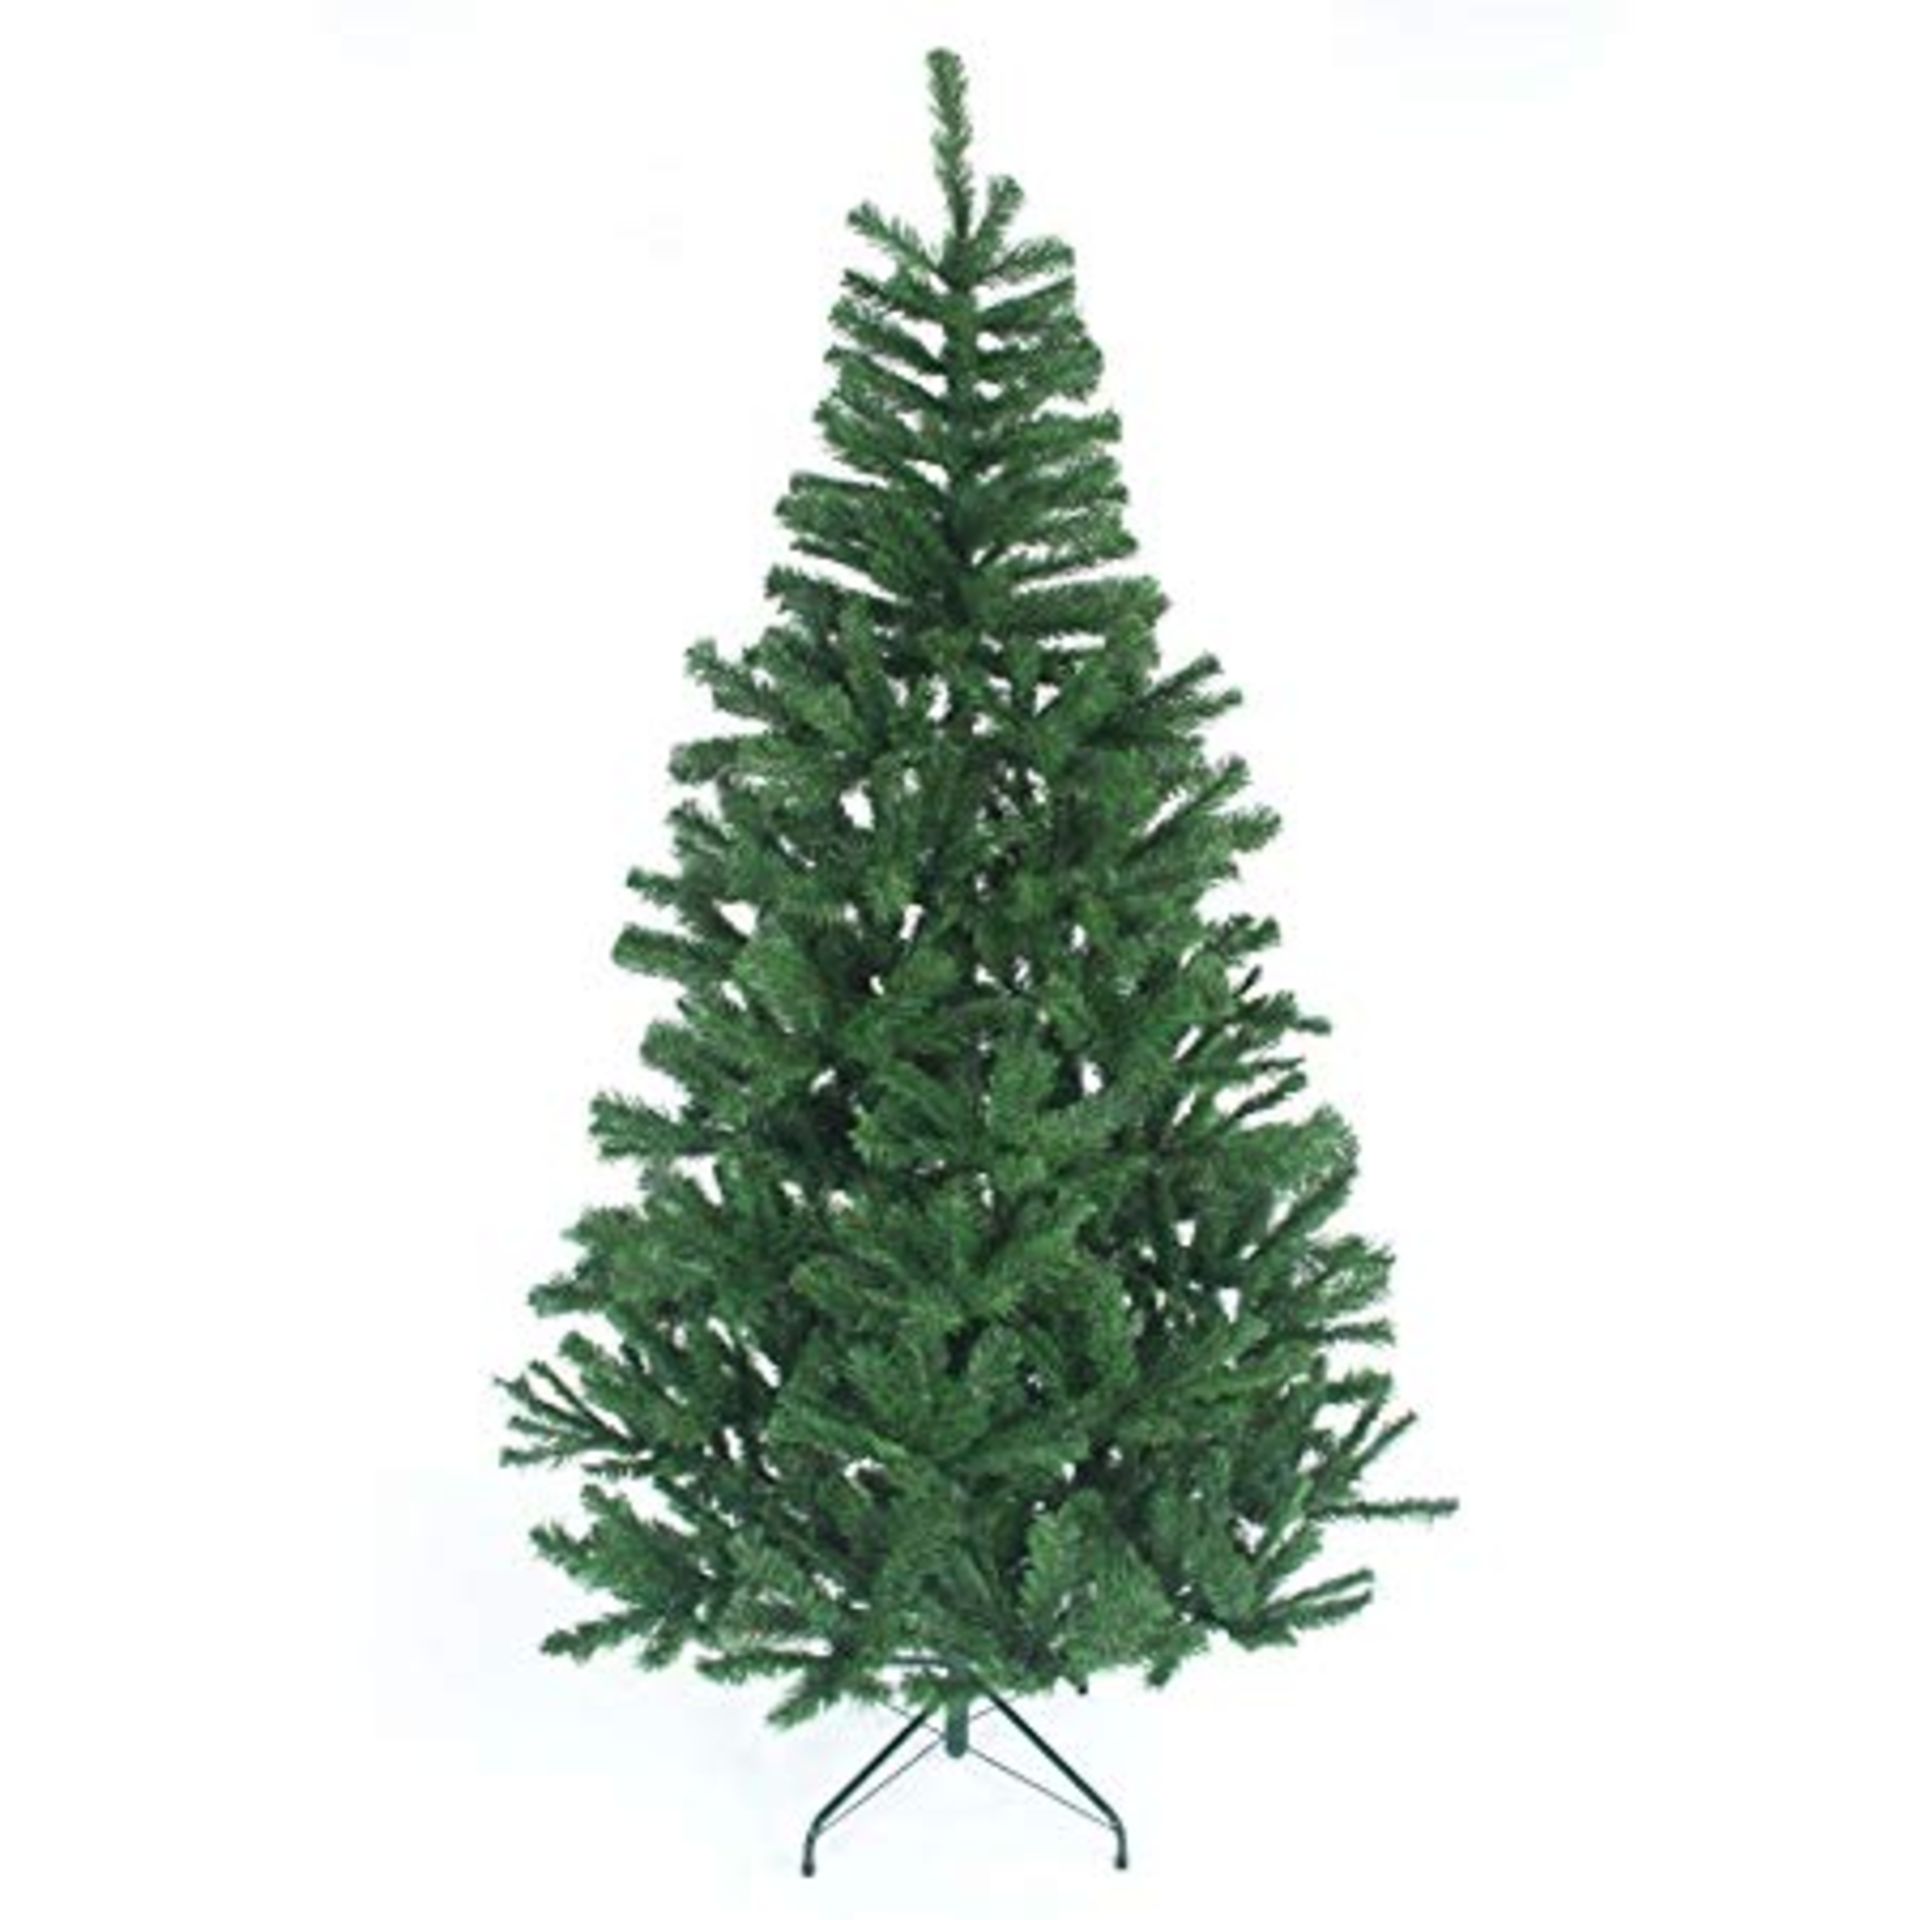 V Brand New Fantastic Quality Huge 6ft Green Spruce Effect Christmas Tree - Online Price £79.99 (